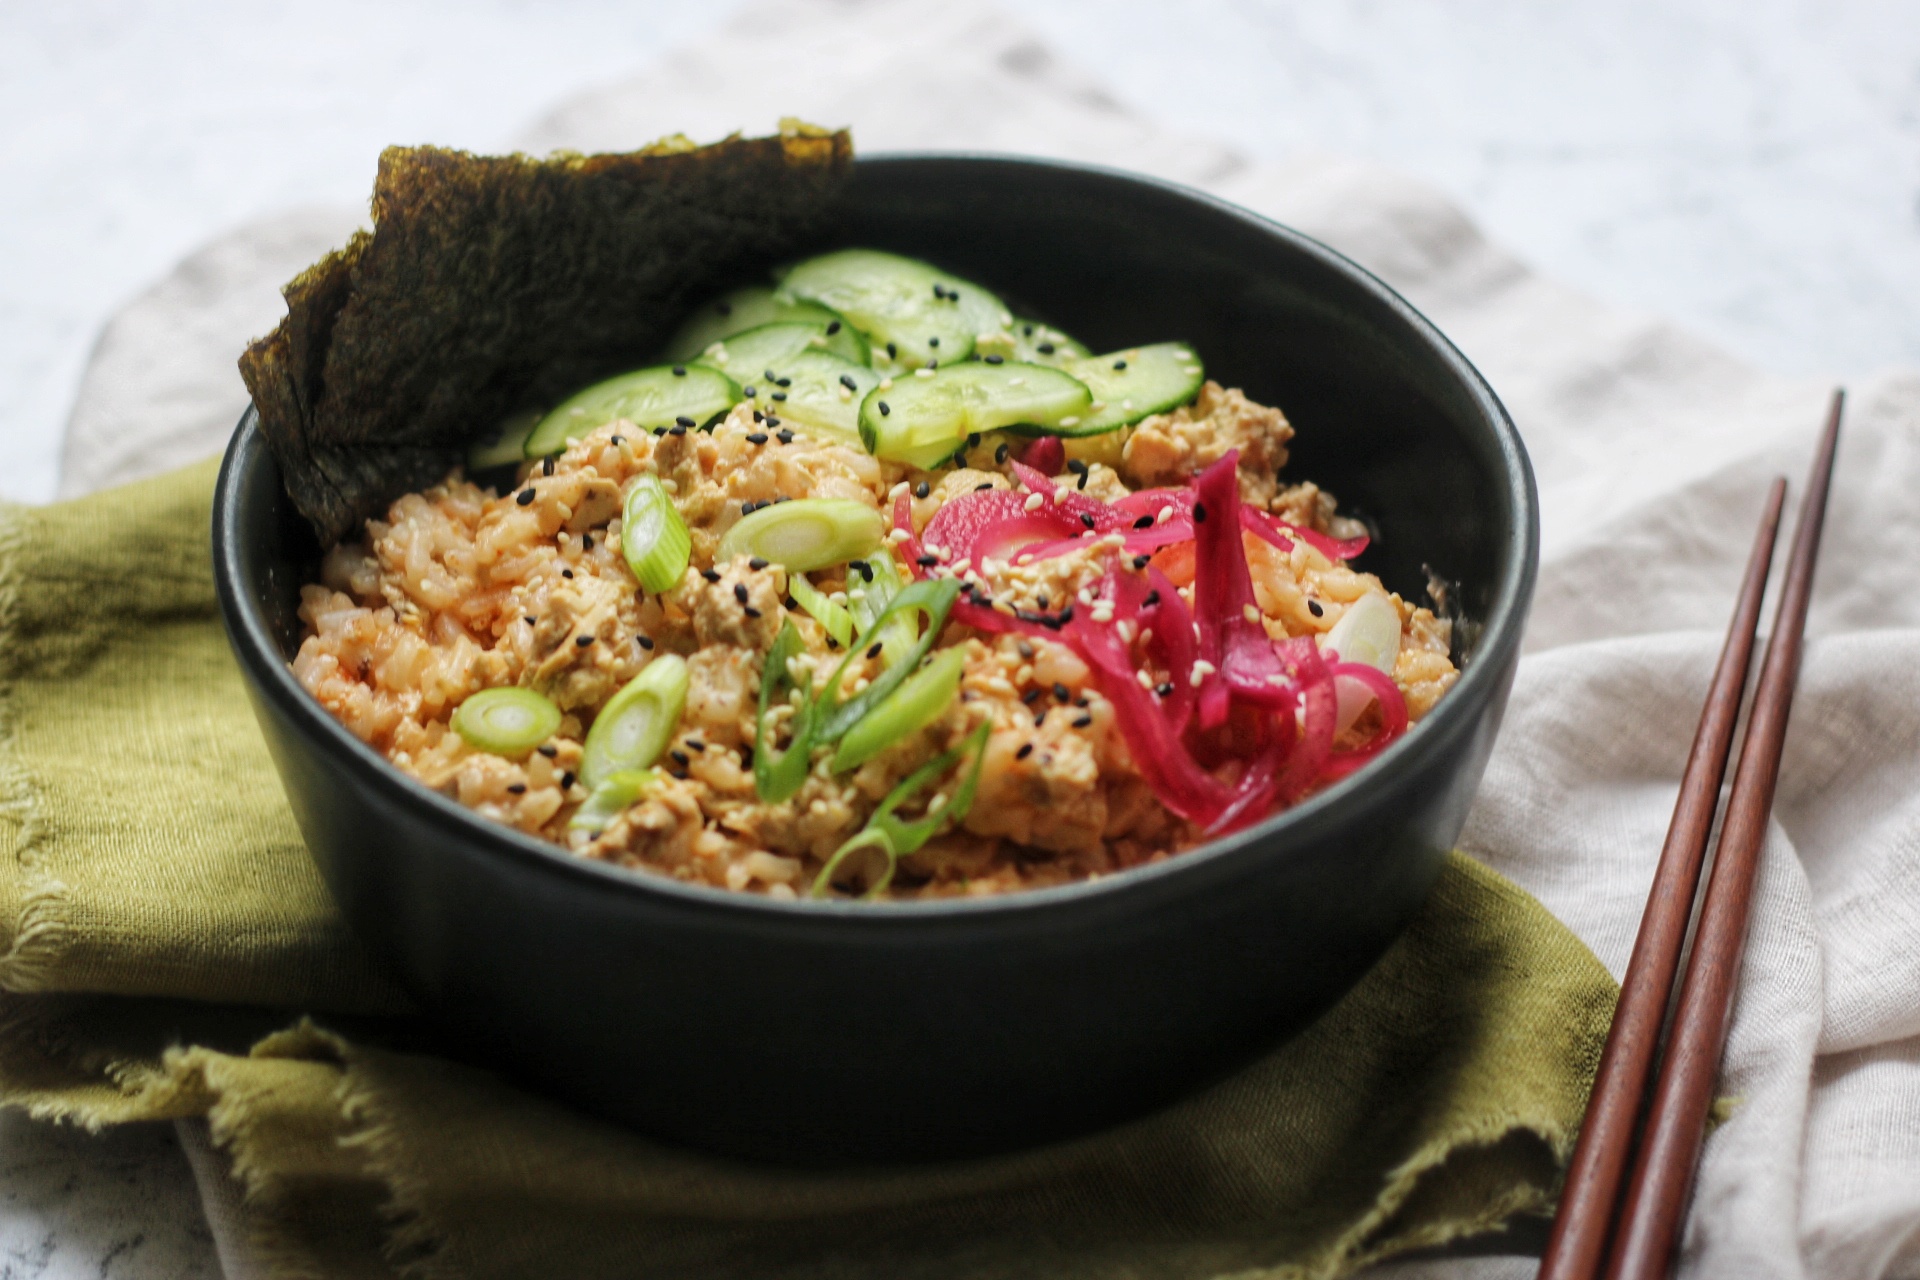 Flaky Tofu “Salmon” and Rice Bowl